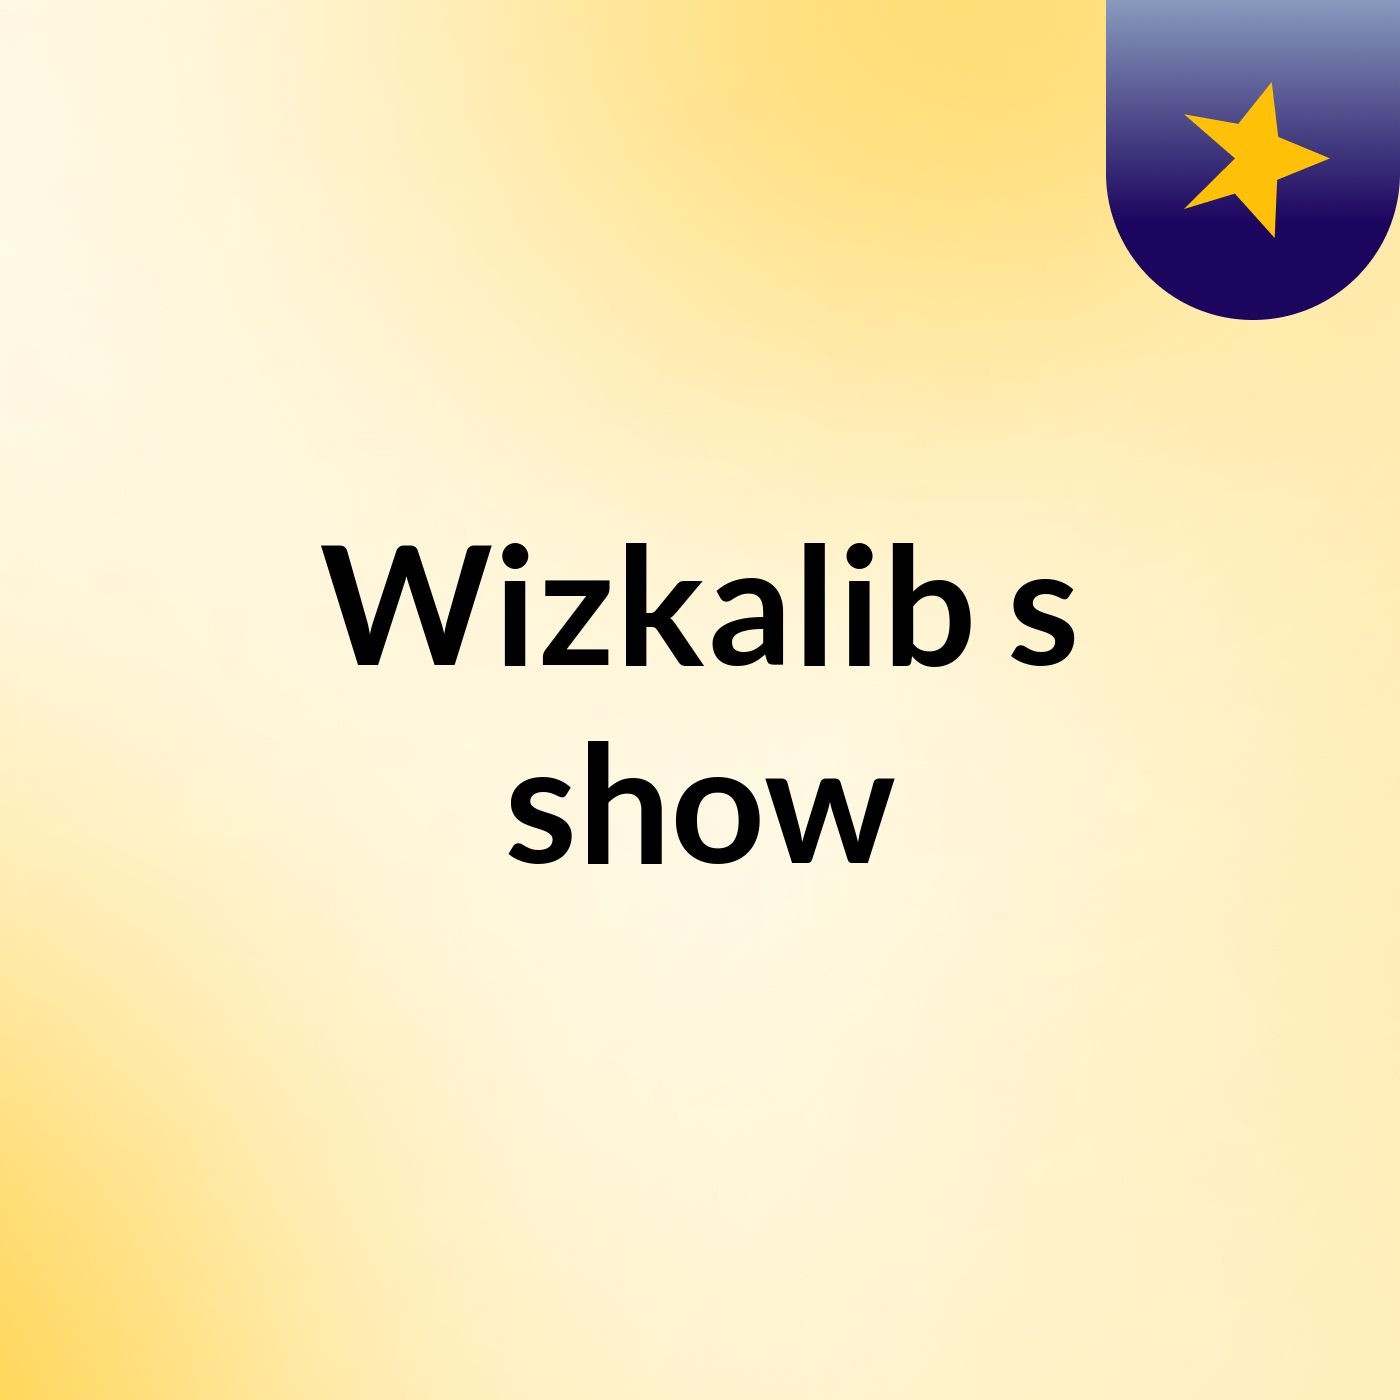 Wizkalib's show